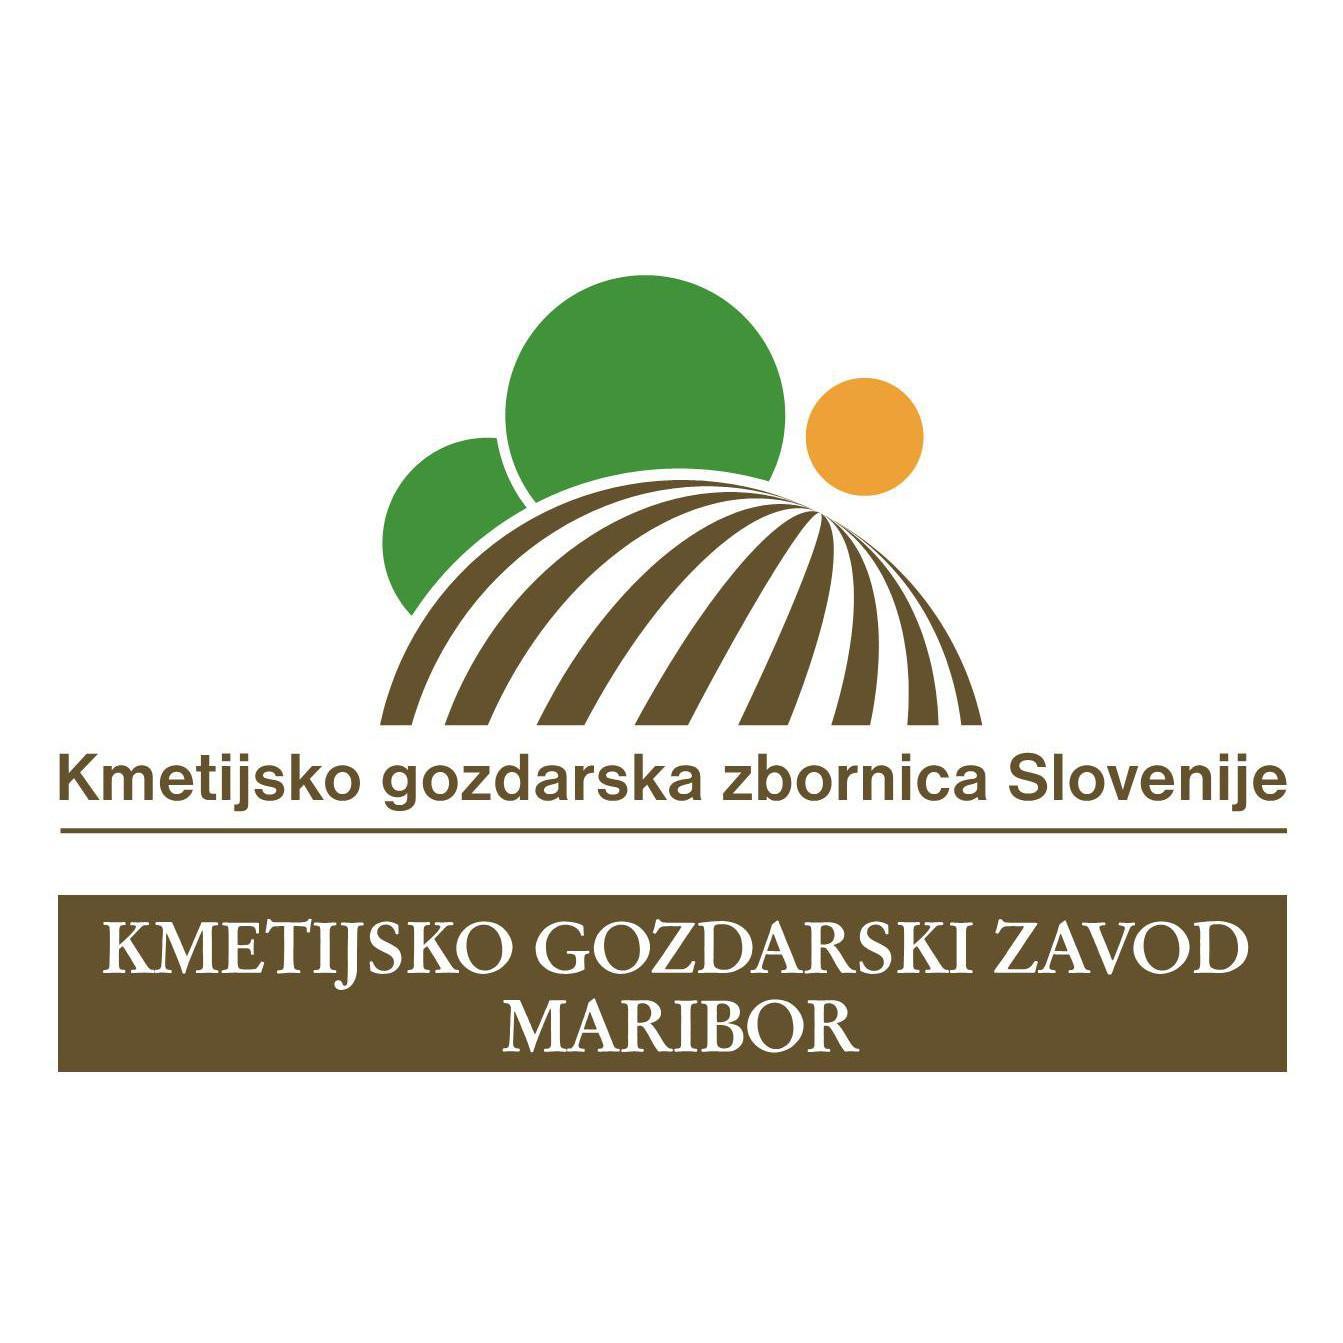 KGZS Zavod Maribor